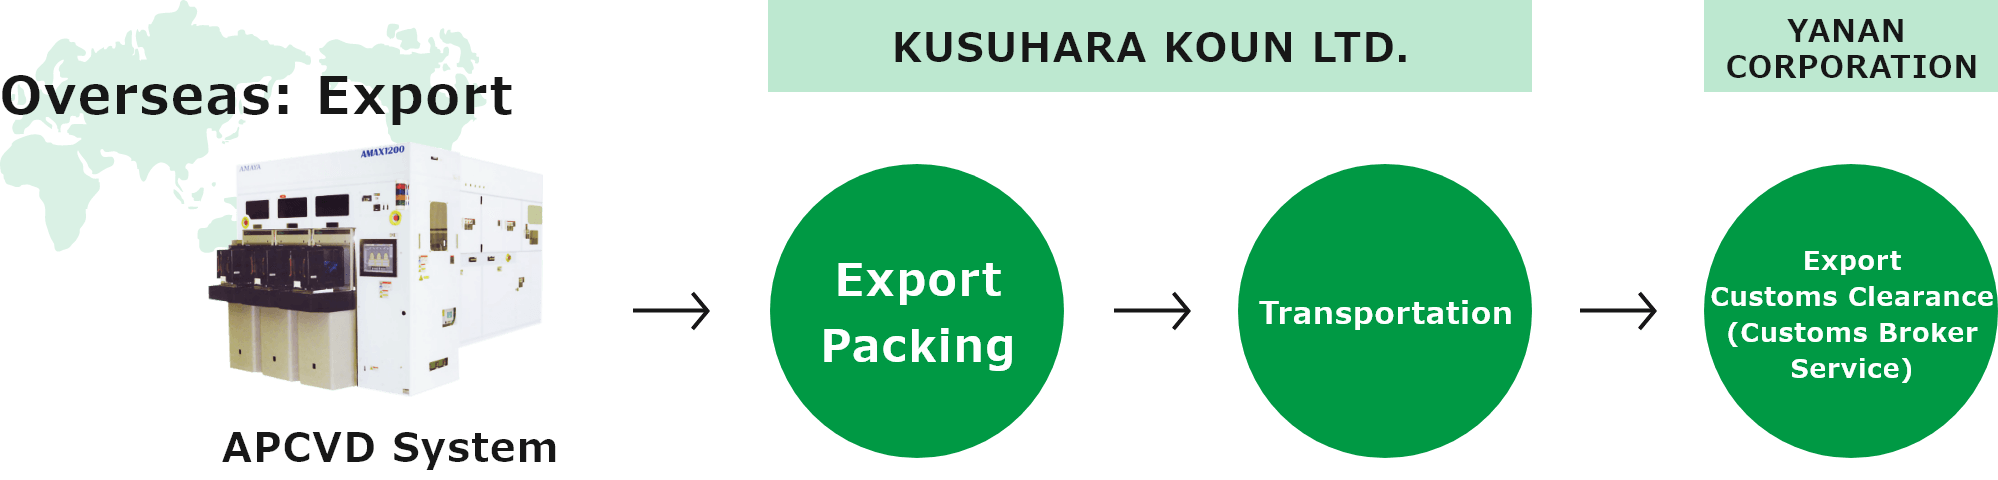 Overseas (Export): Export Packing, Transportation → KUSUHARA KOUN LTD. Export Customs Clearance (Customs Broker Service) → YANAN CORPORATION.